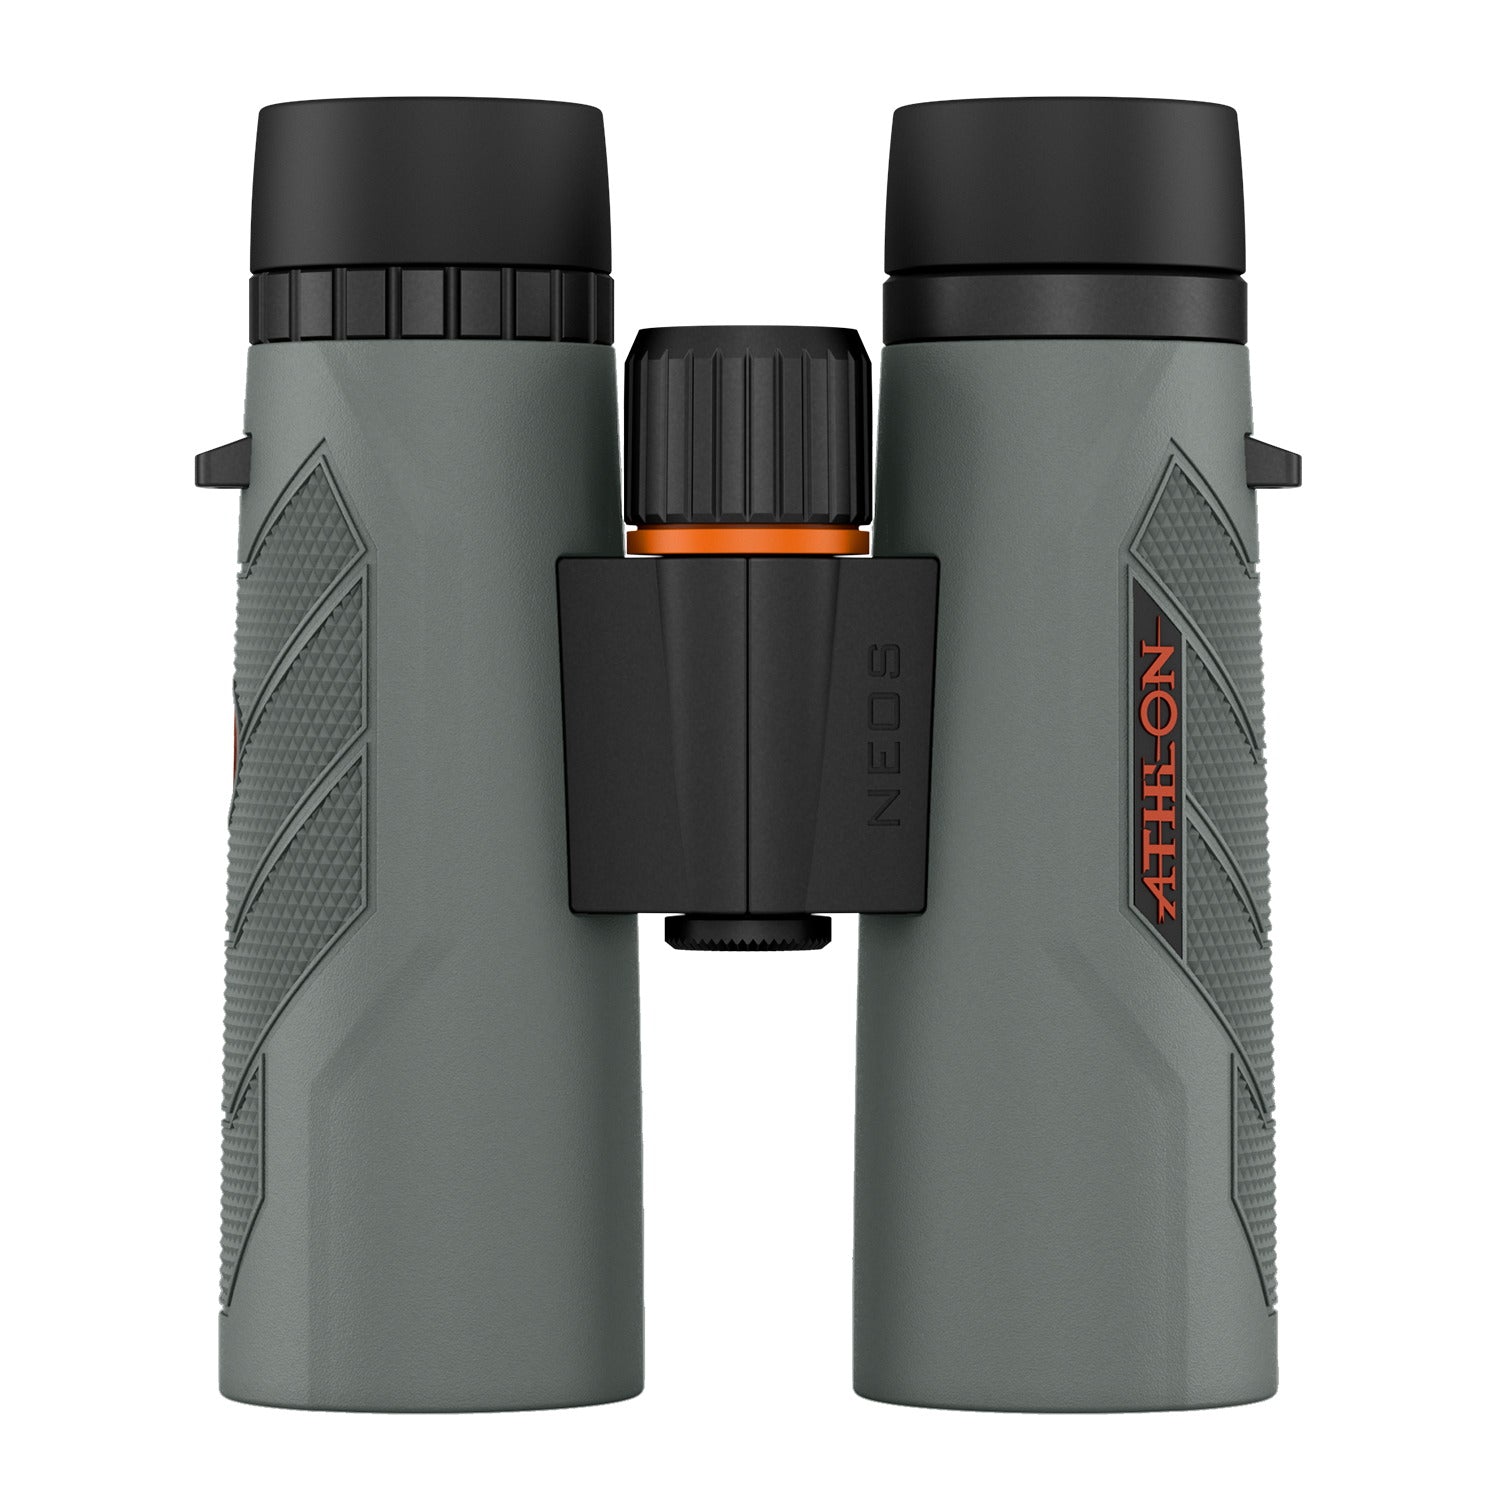 Athlon Neos G2 HD Binoculars